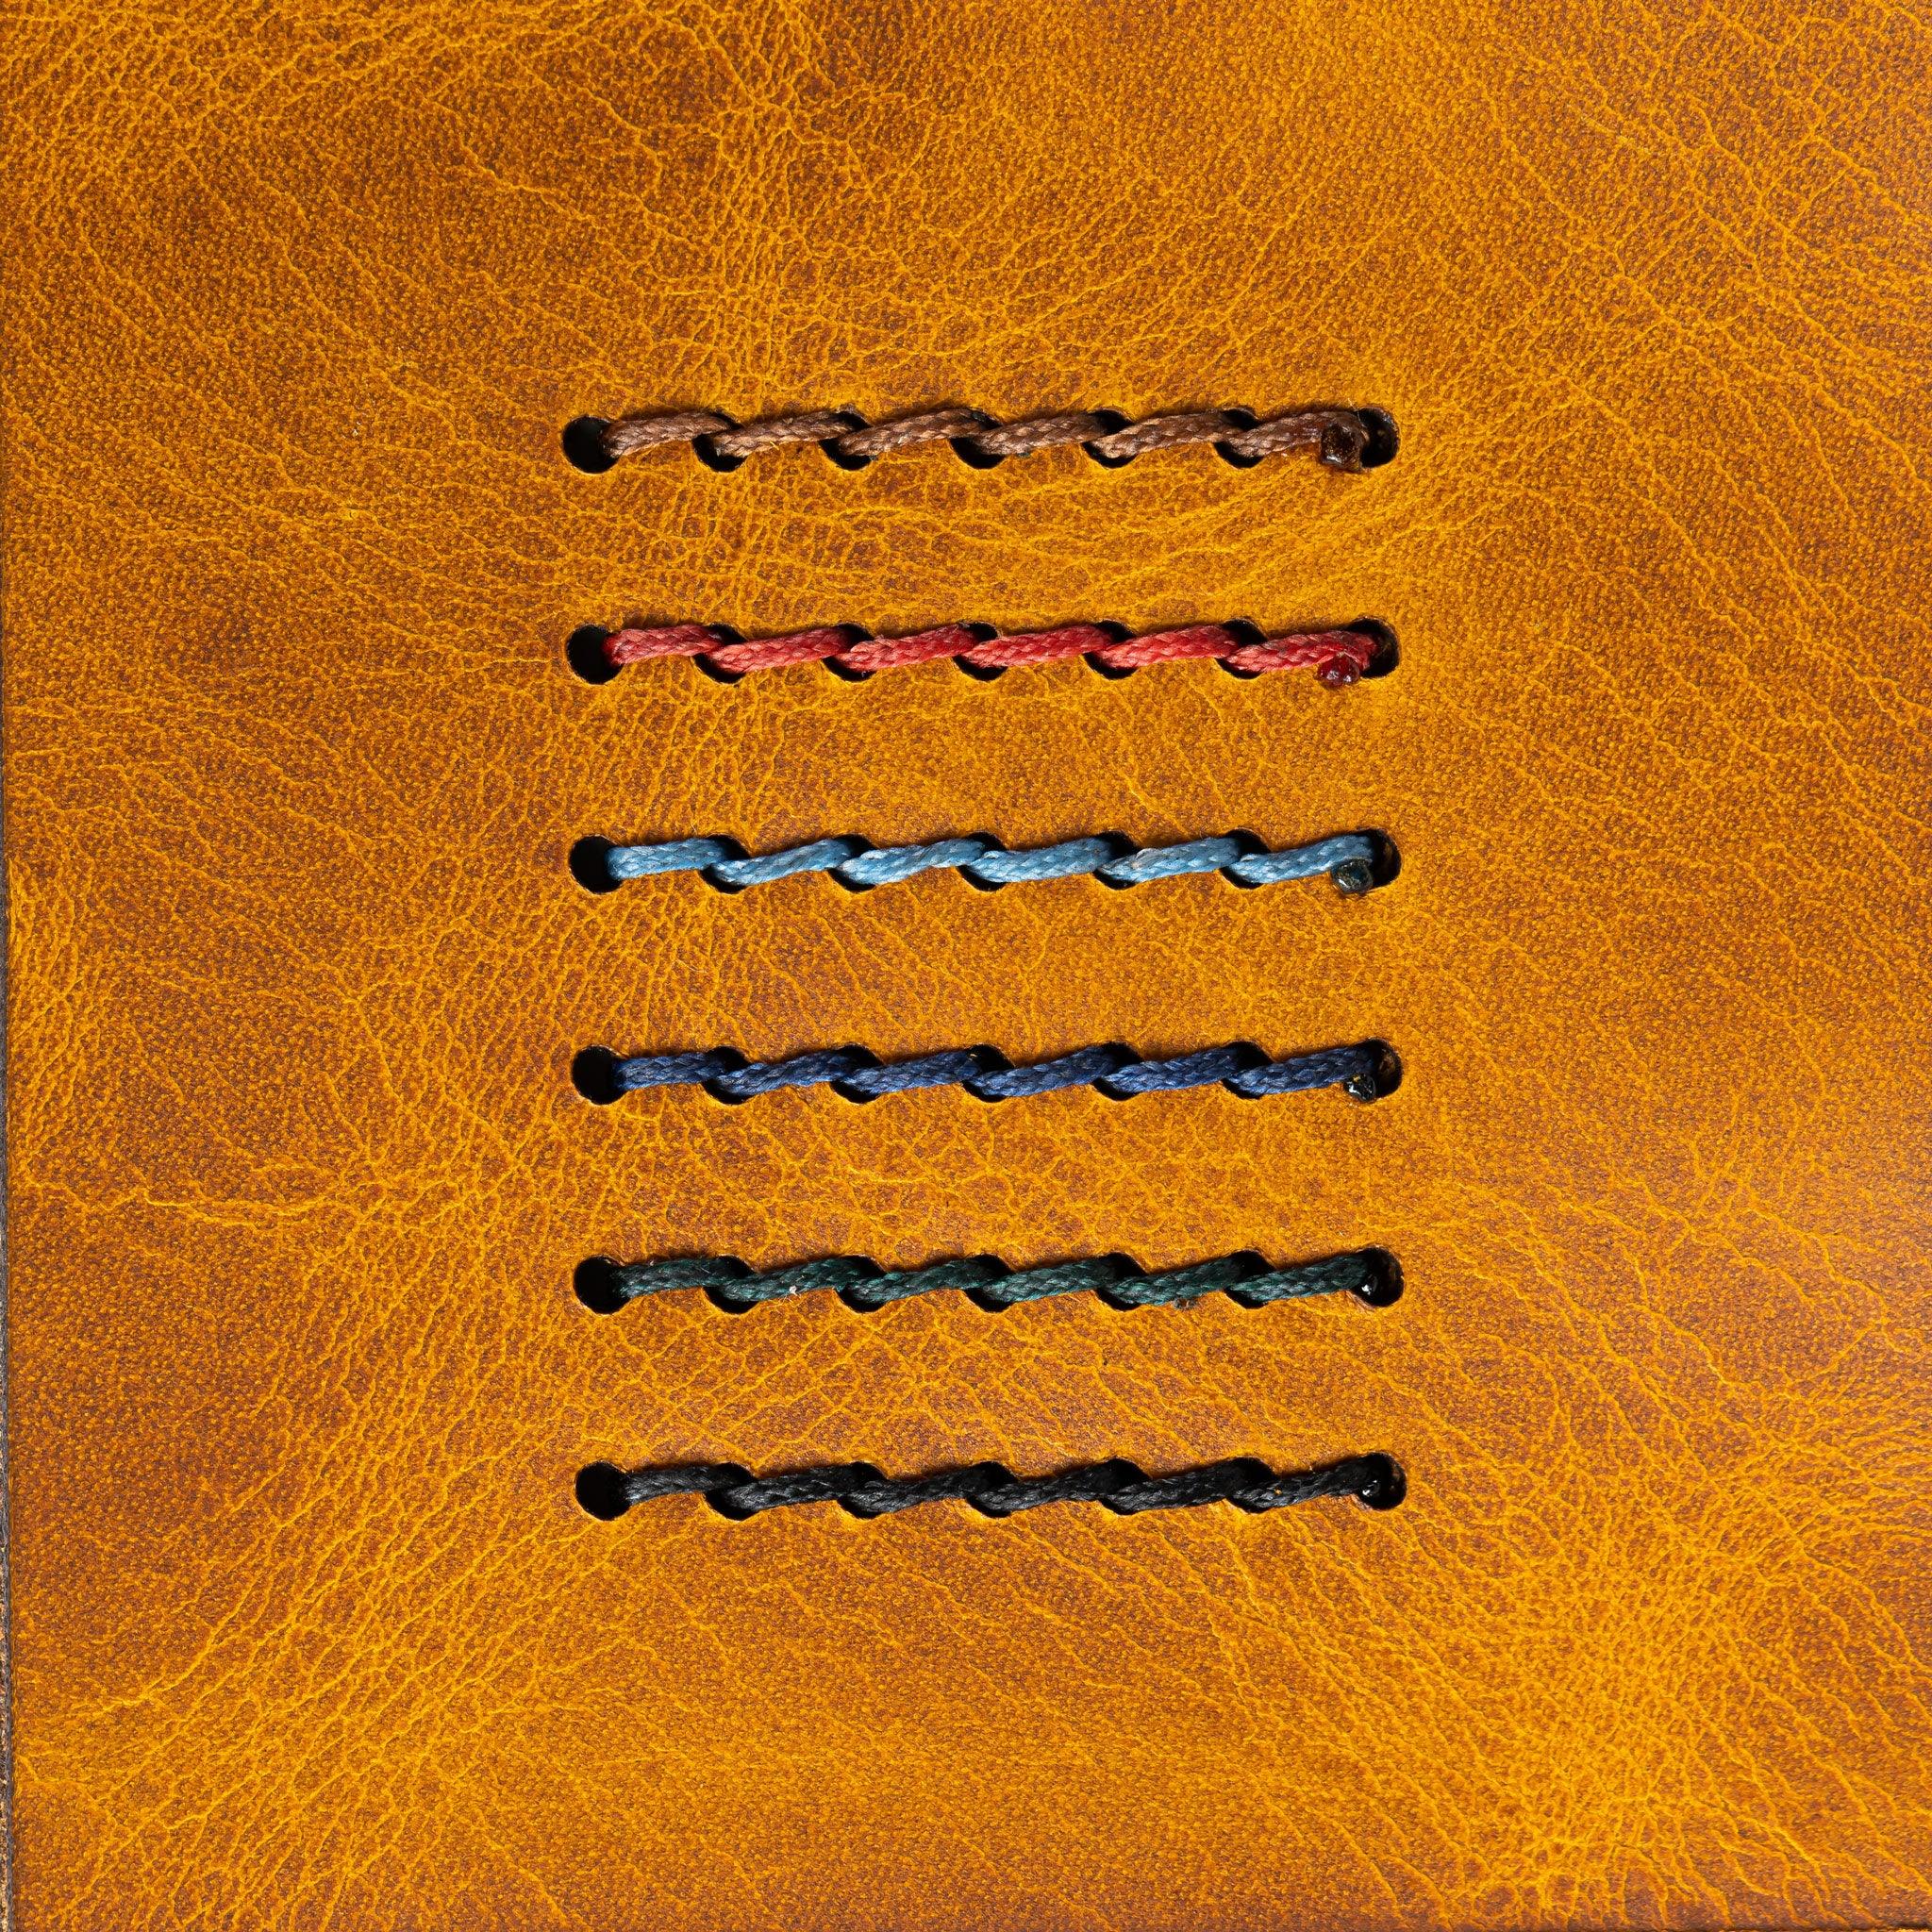 Big Spender Leather Wallet in Butterscotch - Espacio Handmade